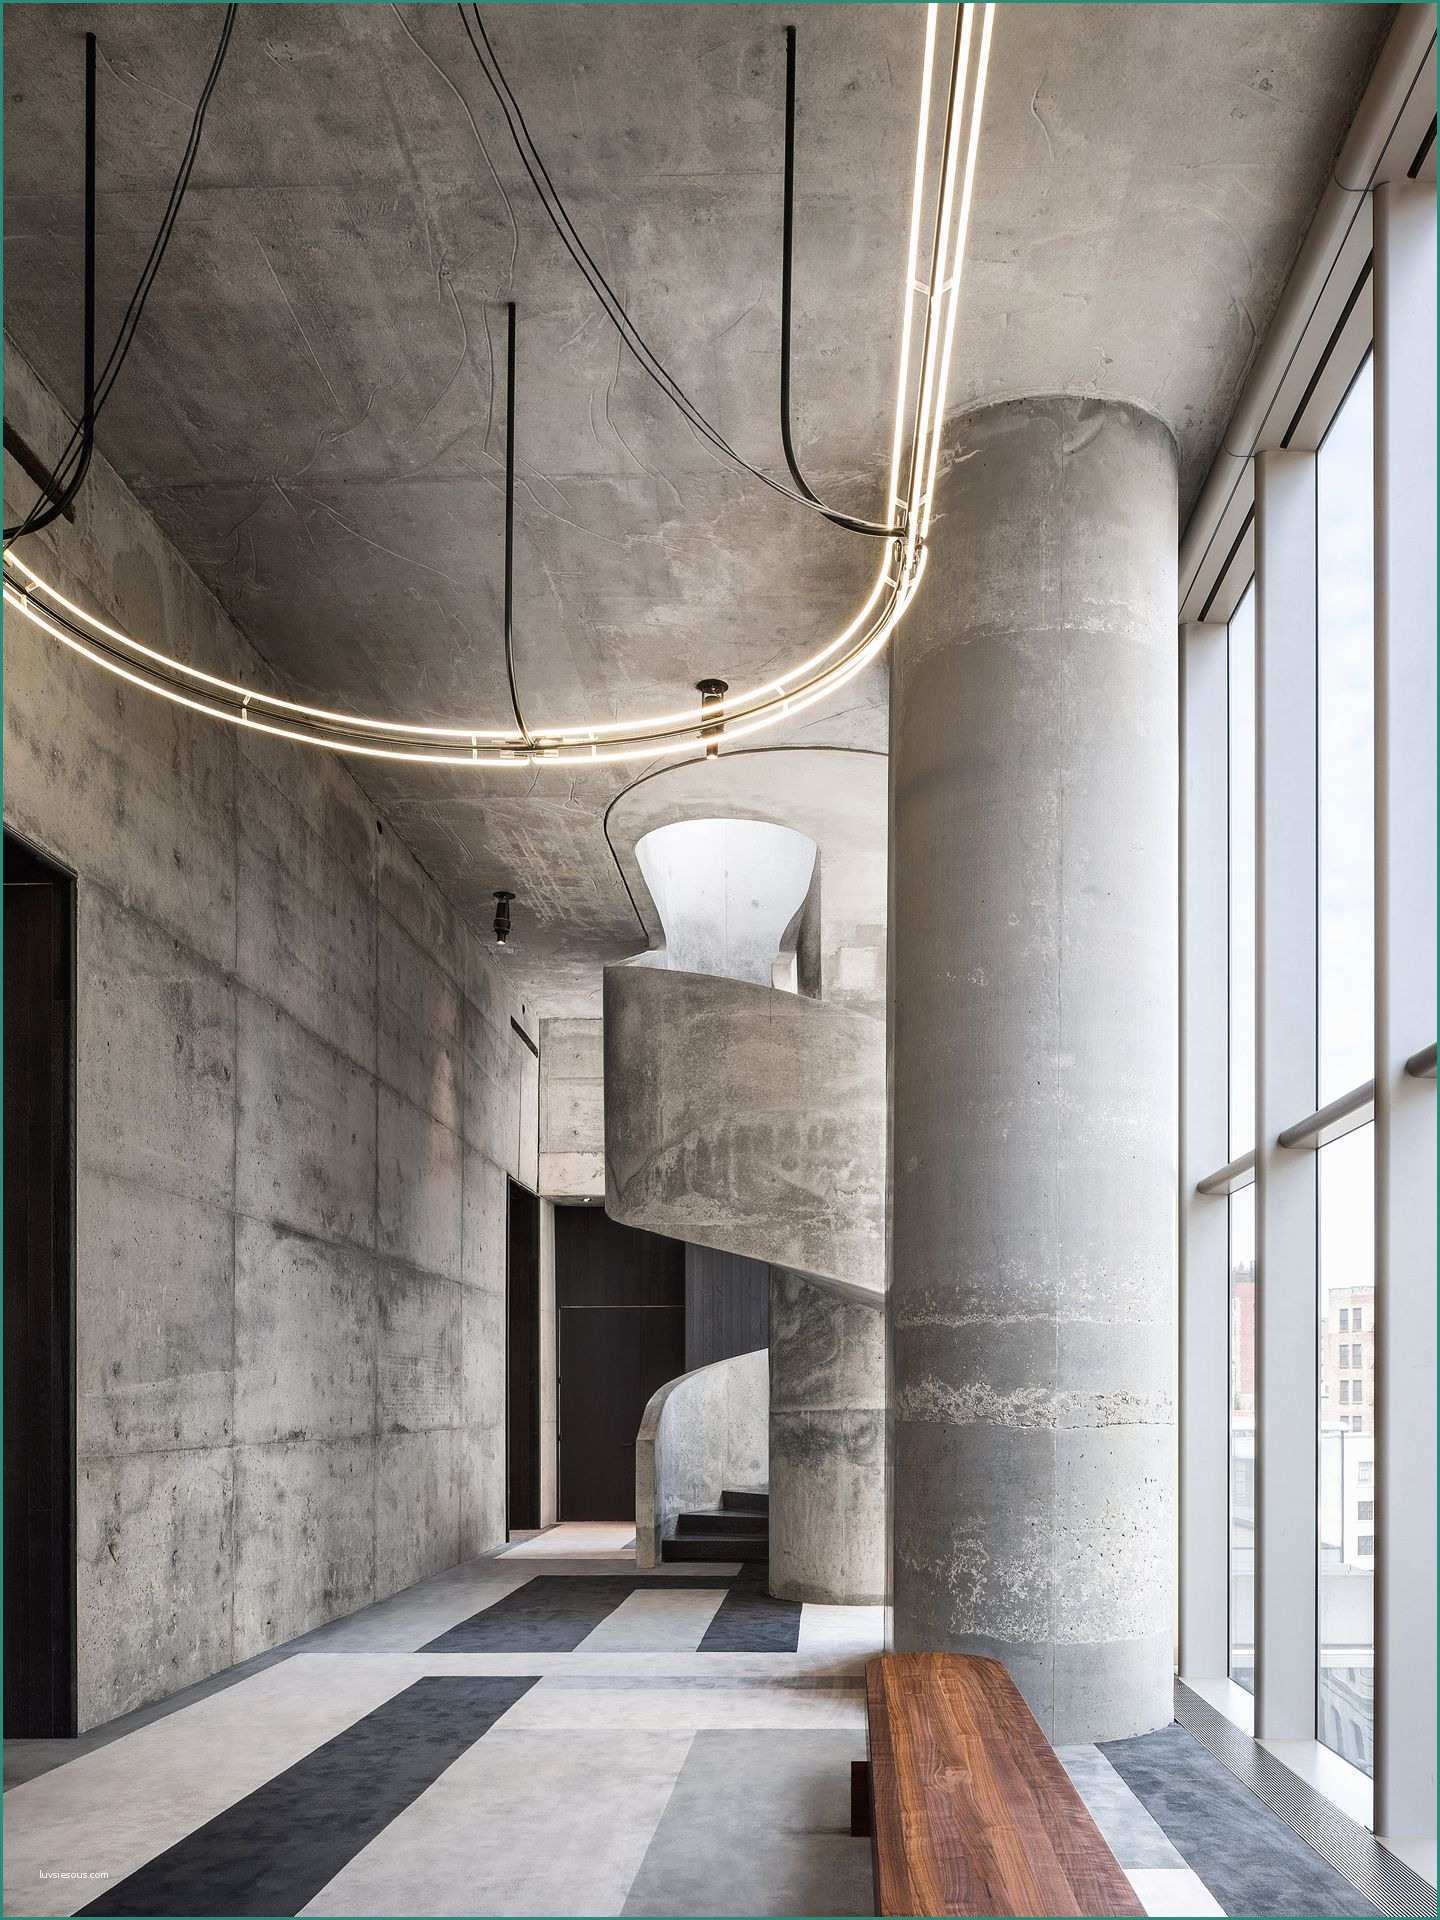 Scala Elicoidale Cemento E the Raw Interior Of Herzog & De Meuron S Jenga Building Has Been